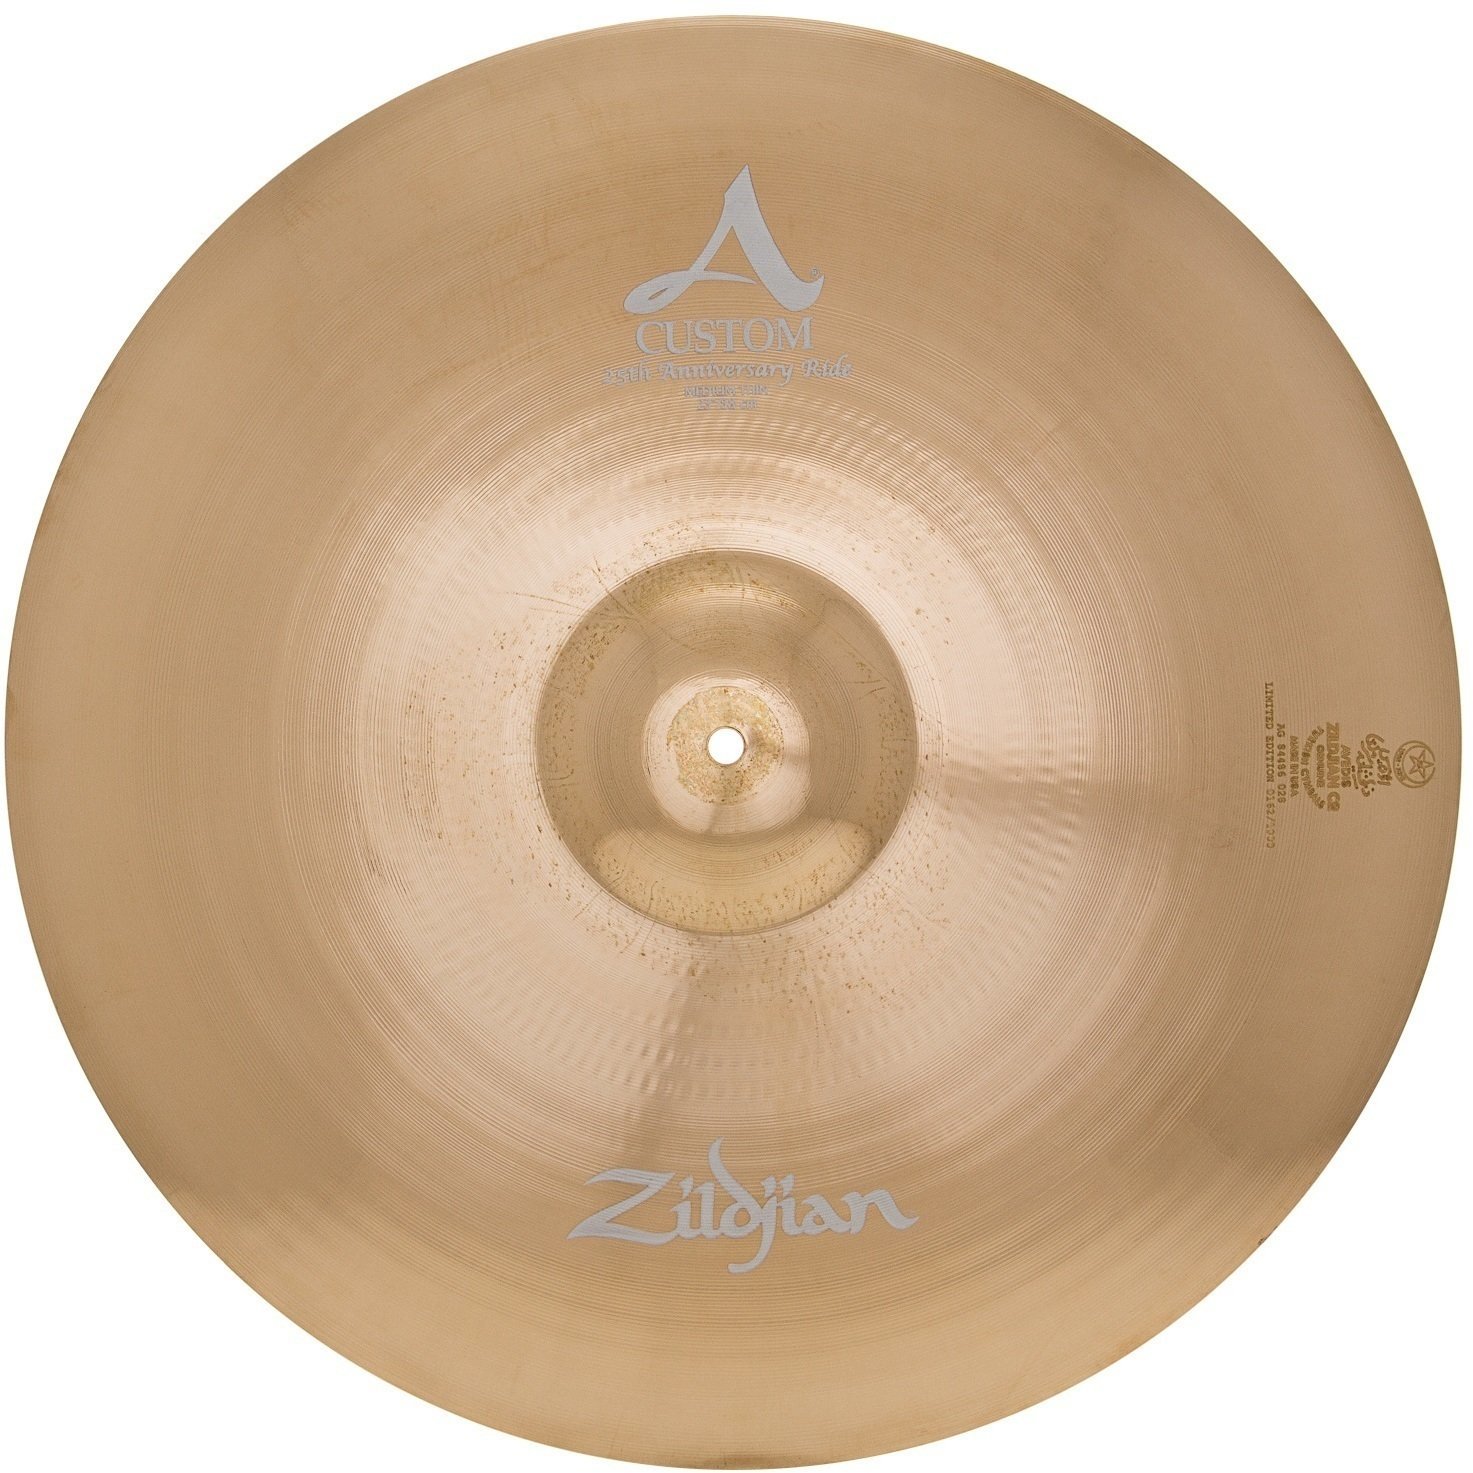 Cymbale ride Zildjian ACP25 A Custom 25th Anniversary Limited Edition Cymbale ride 23"